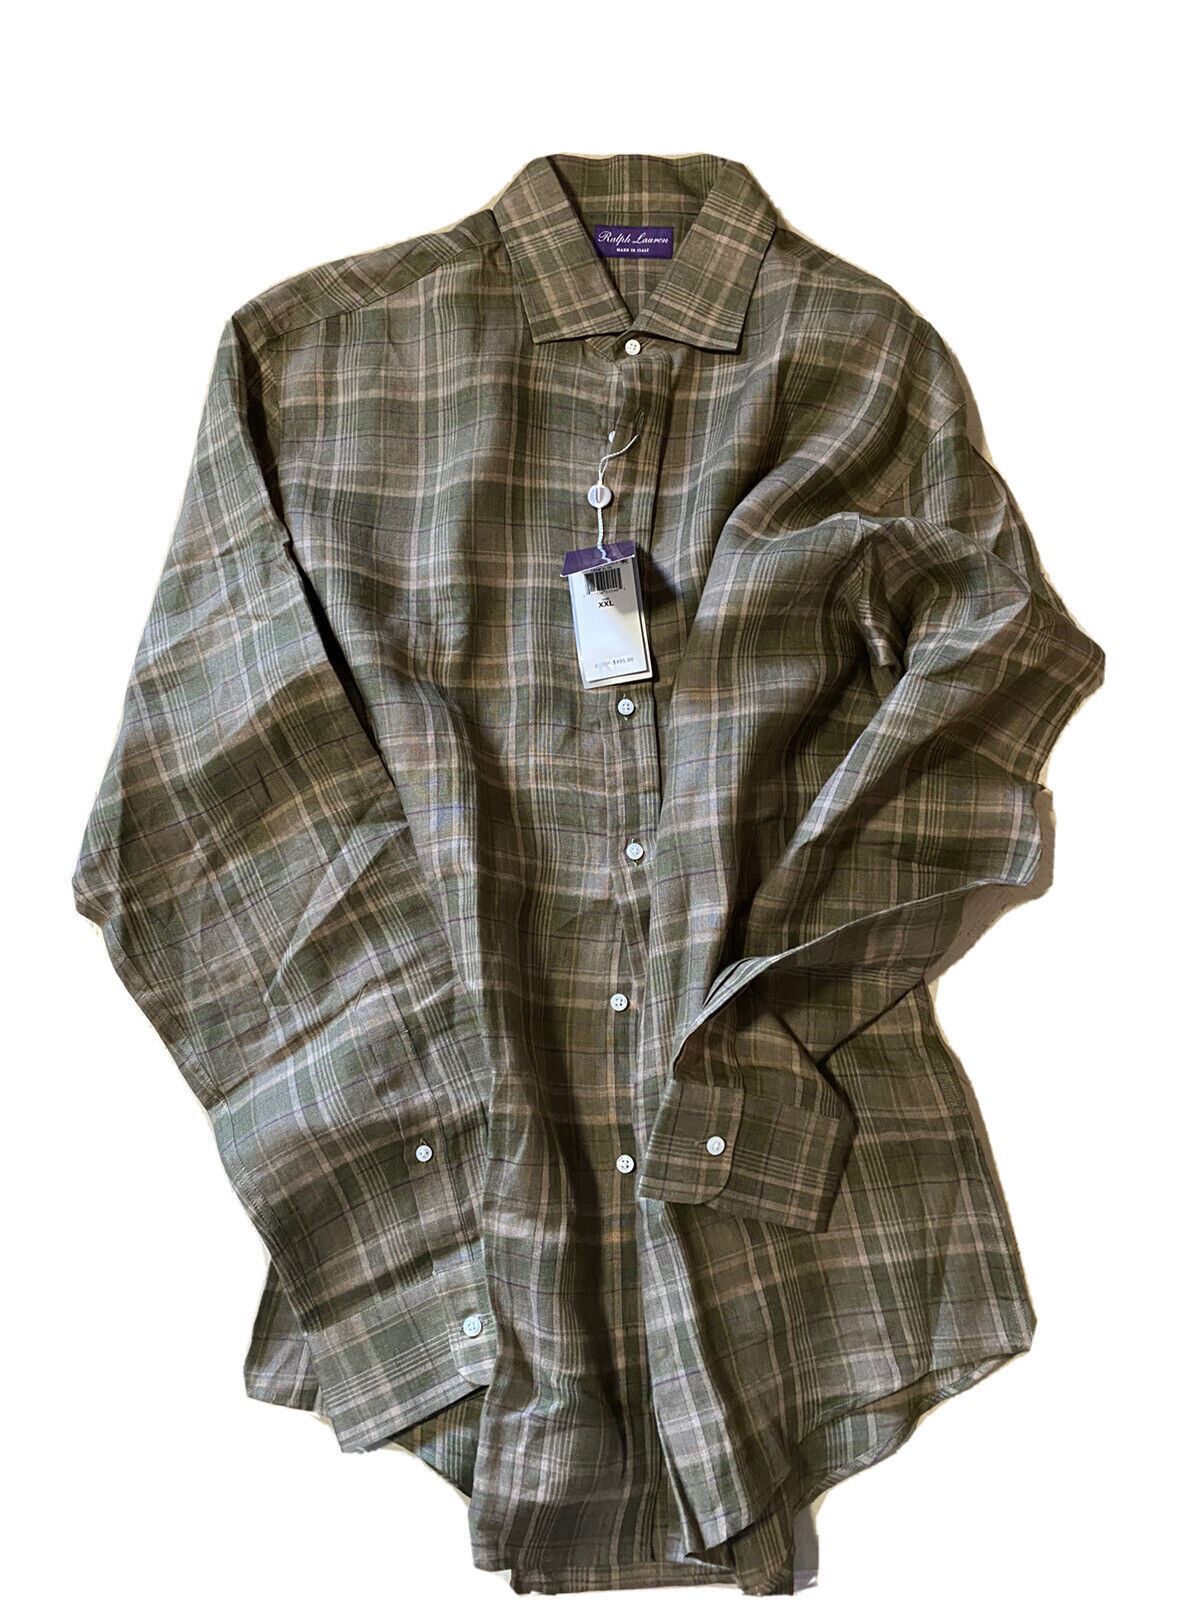 NWT $495 Ralph Lauren Purple Label Мужская льняная рубашка Farm Olive XXL Италия